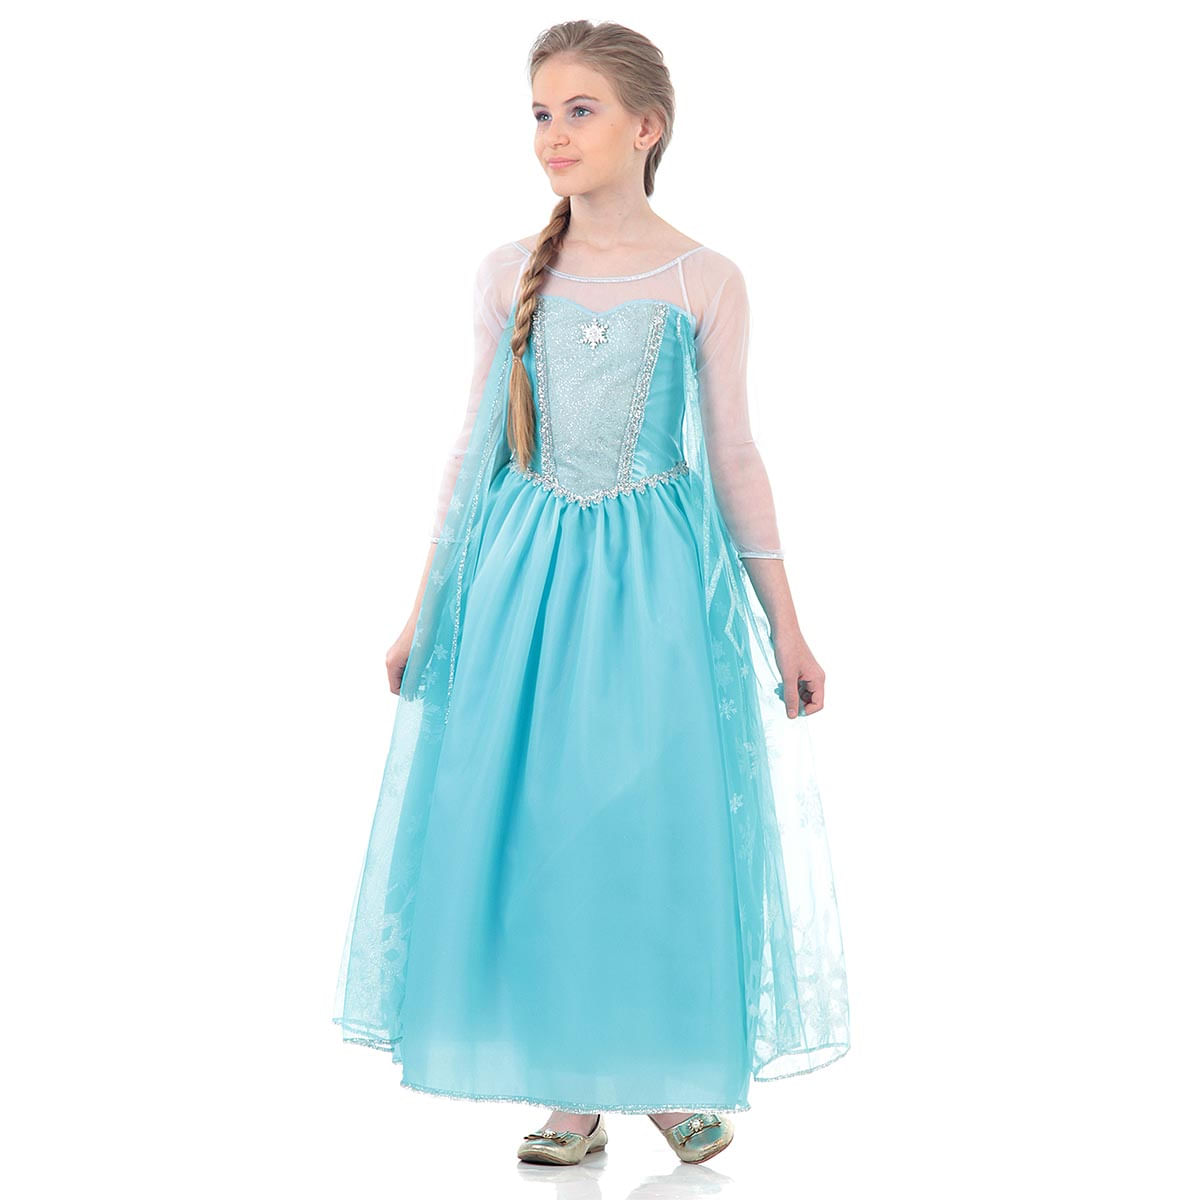 Fantasia Elsa Frozen Infantil Luxo - Disney P / UNICA